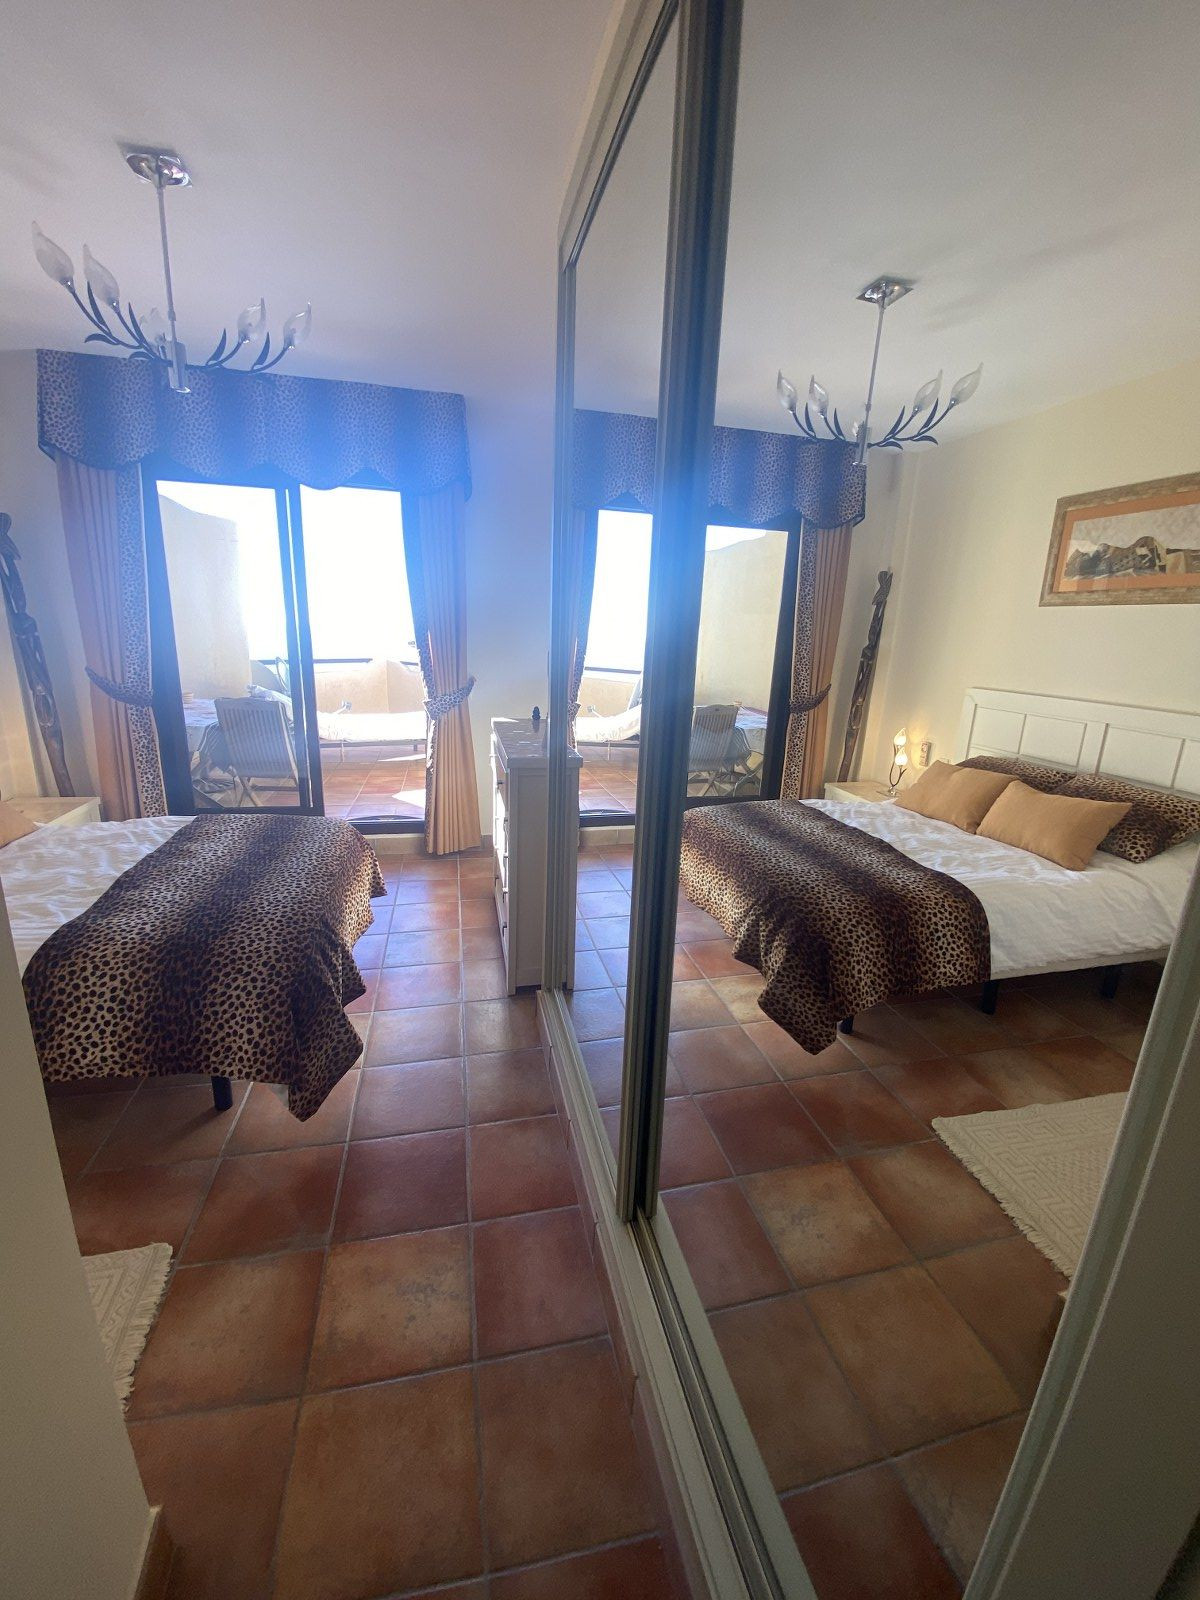 3 bedroom Apartment For Sale in Benalmadena, Málaga - thumb 15